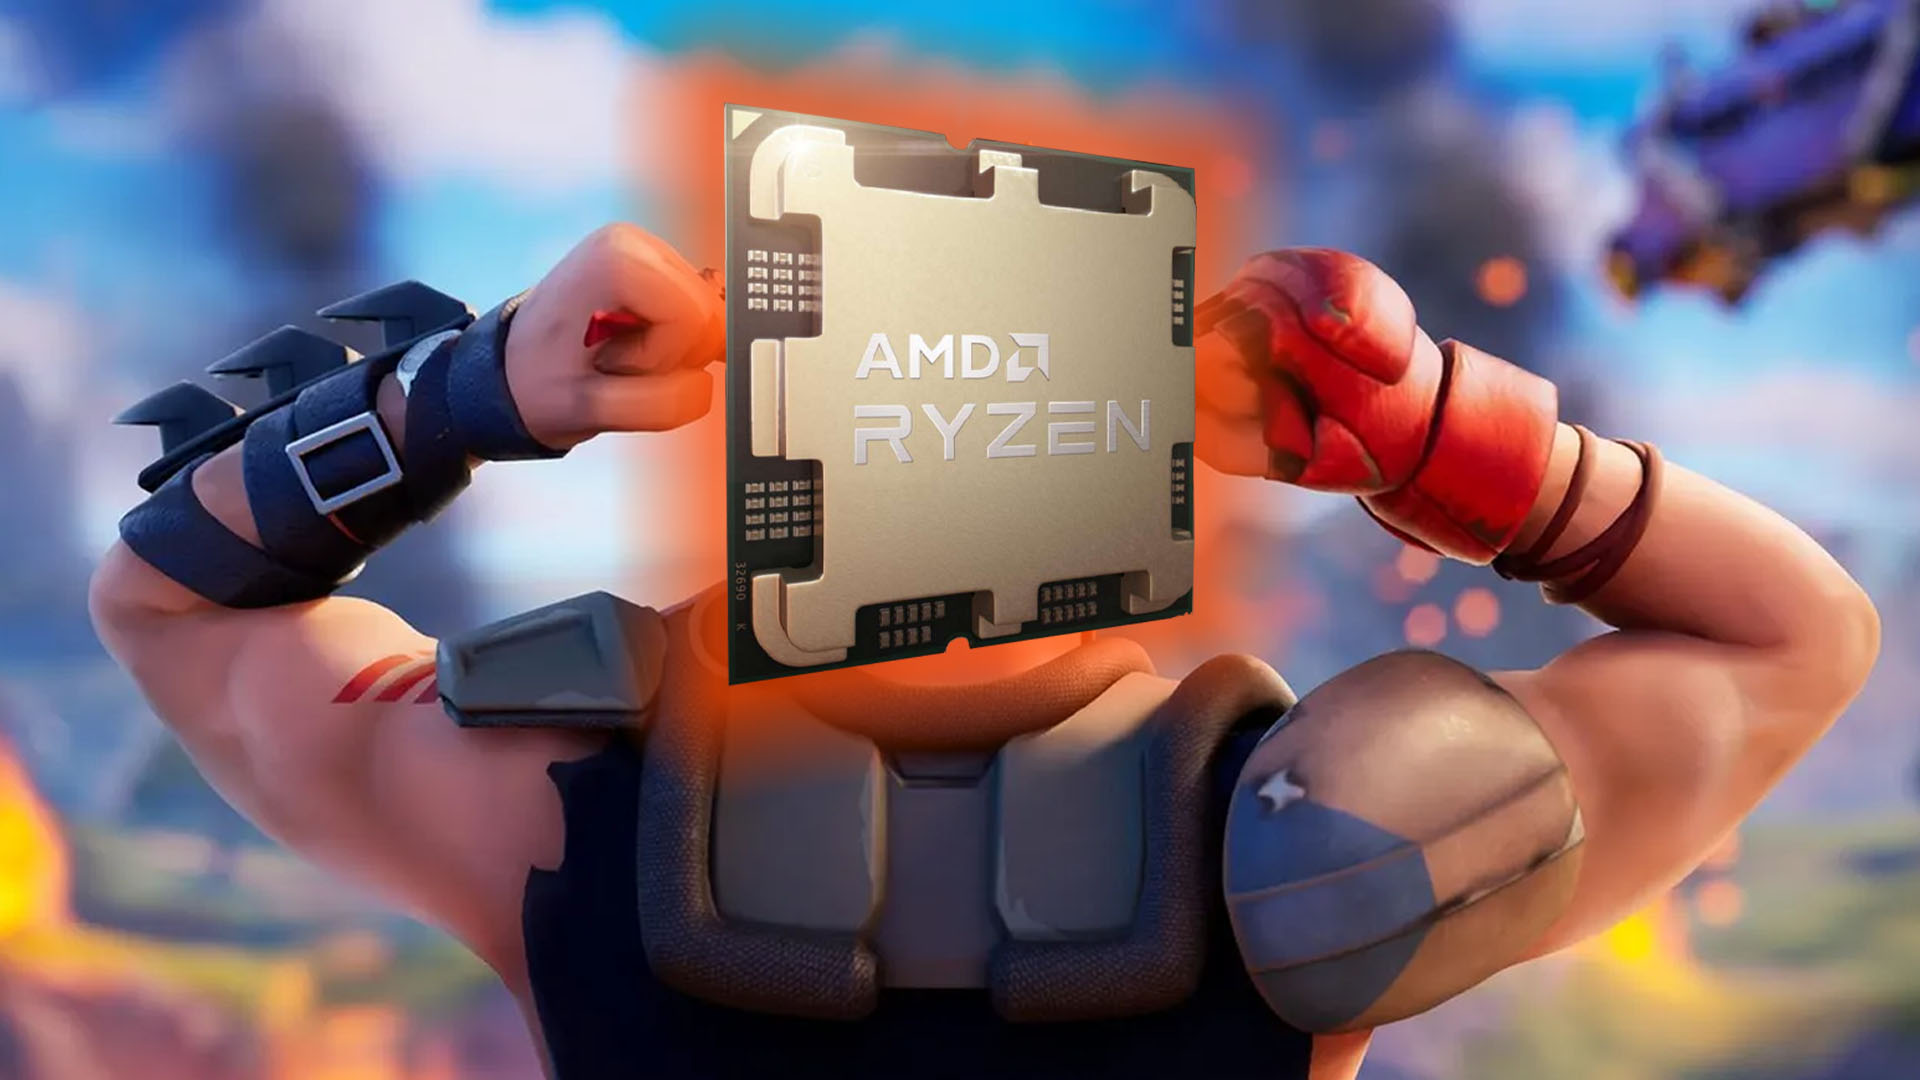 AMD Ryzen 7 8700G, Ryzen 5 8600G & Ryzen 5 8500G APU Benchmarks